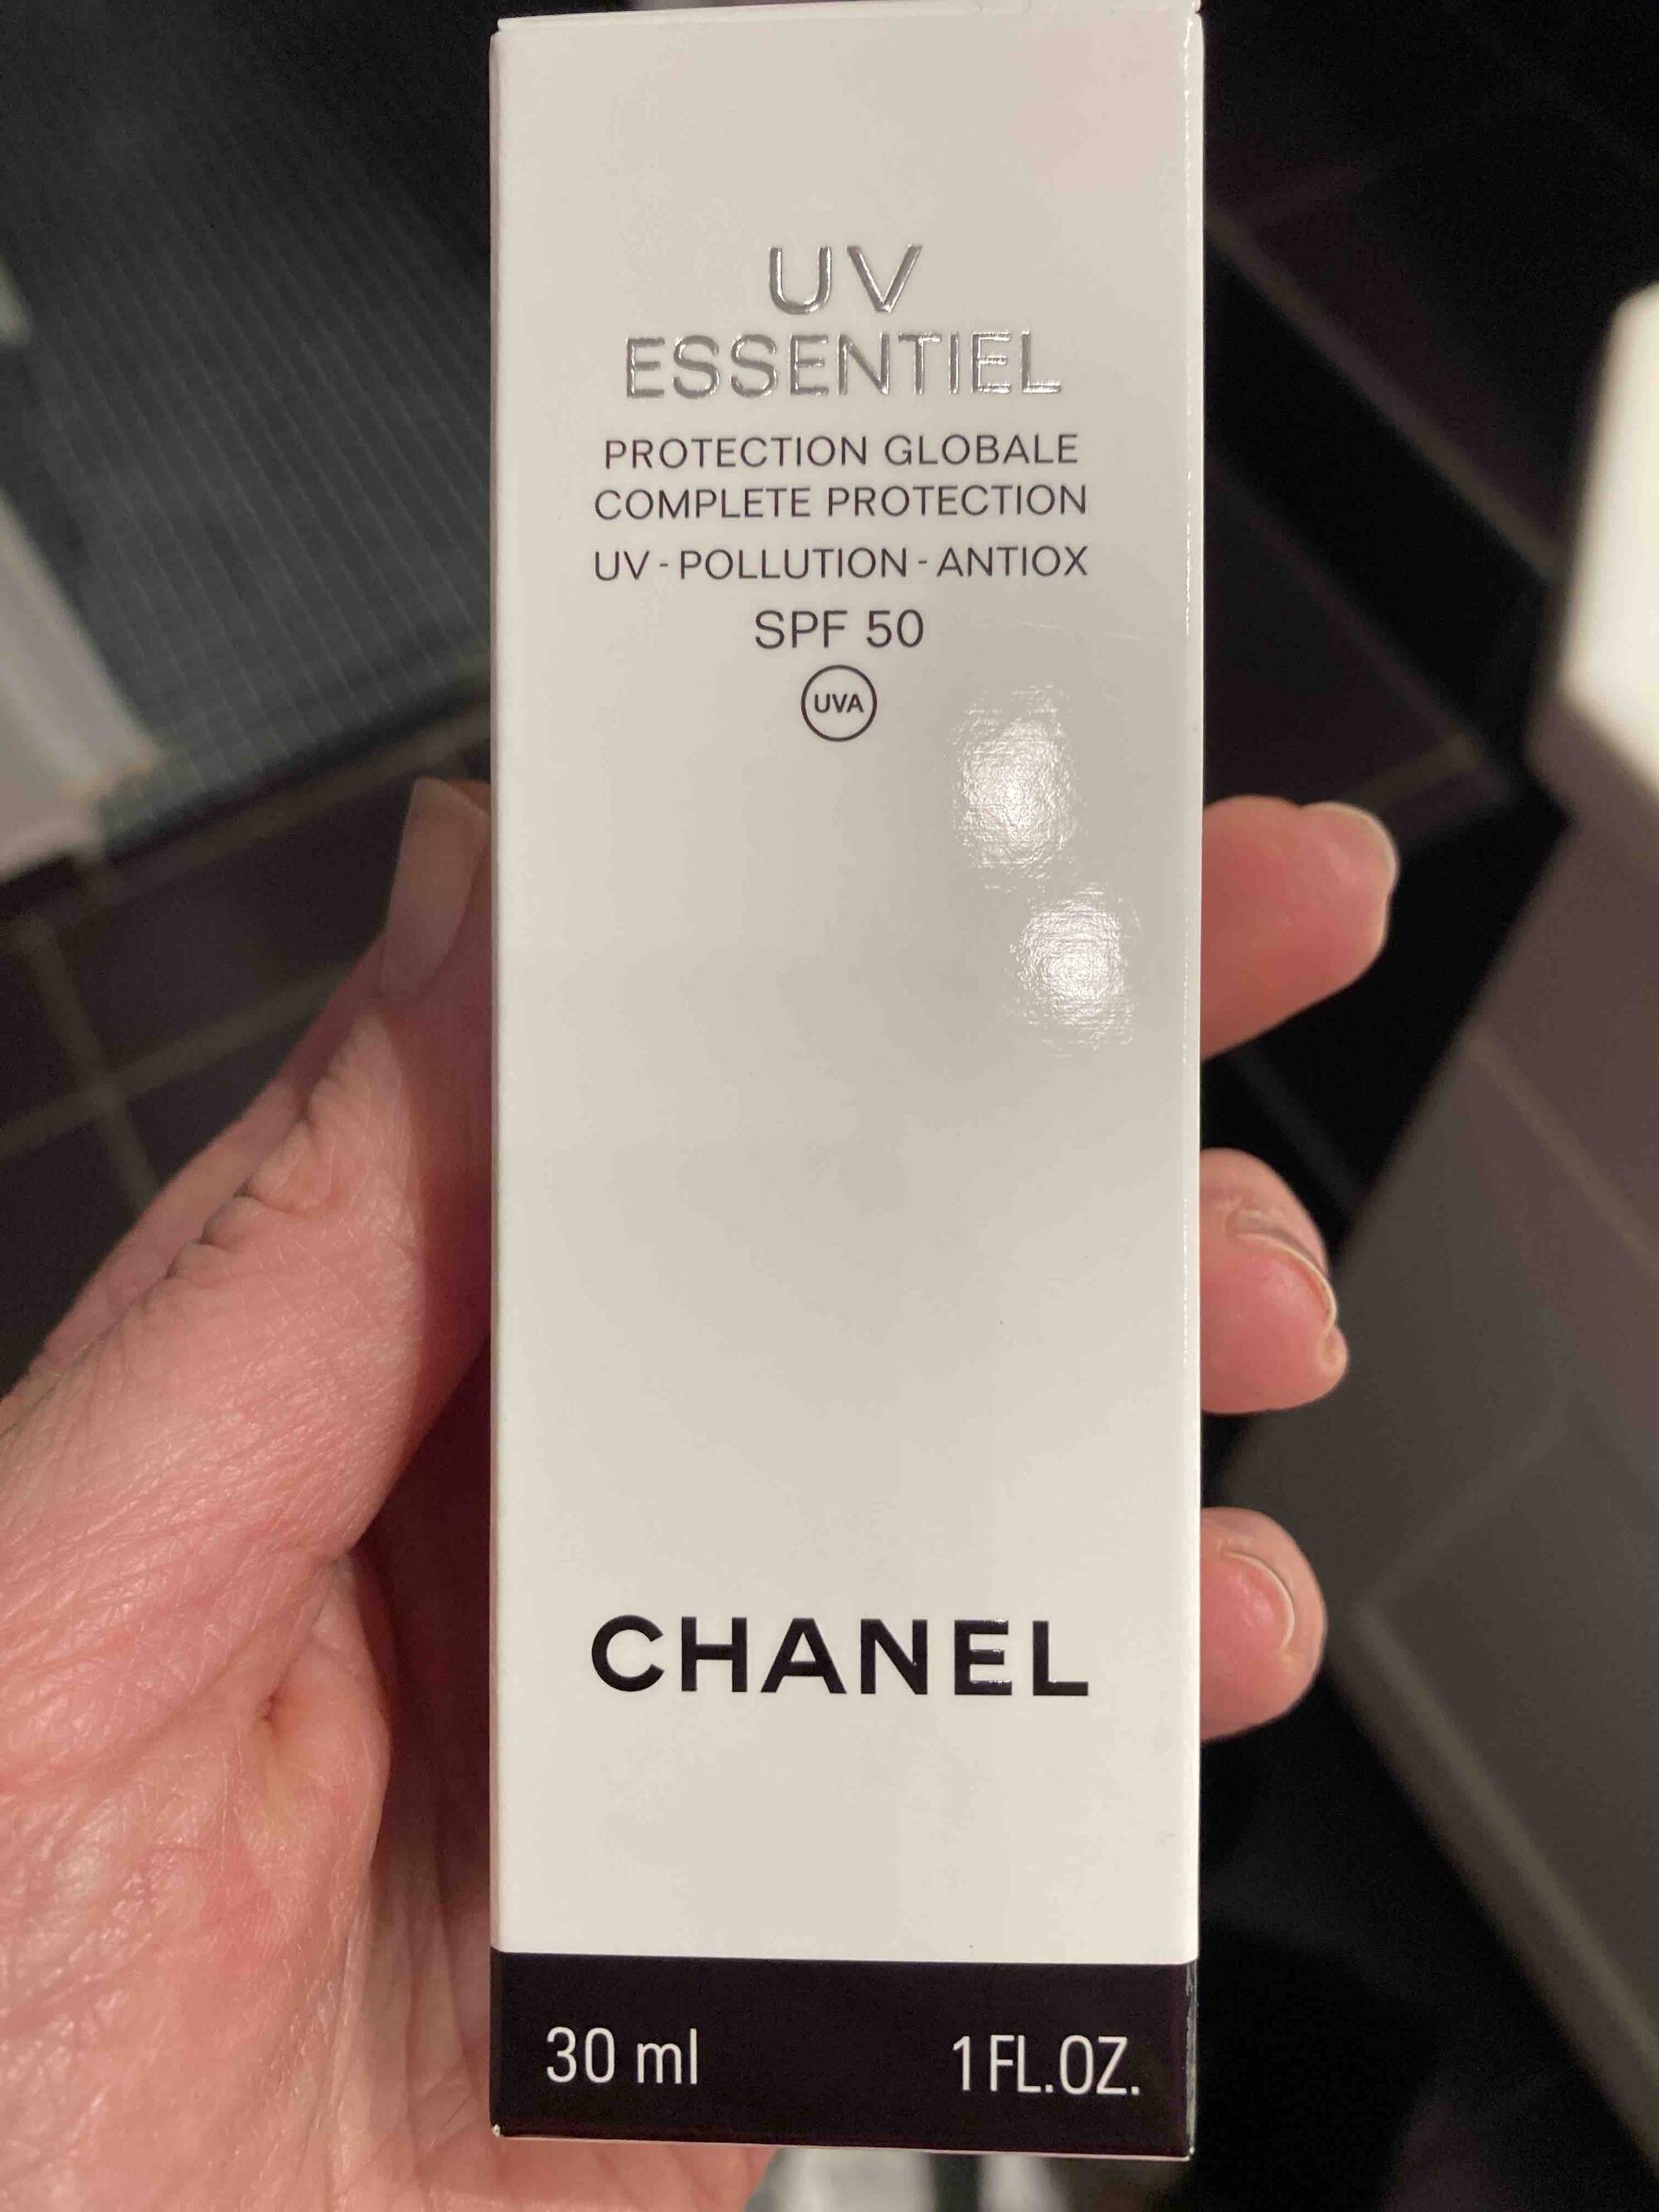  Chanel Uv Essentiel Complete Protection Uv Pollution